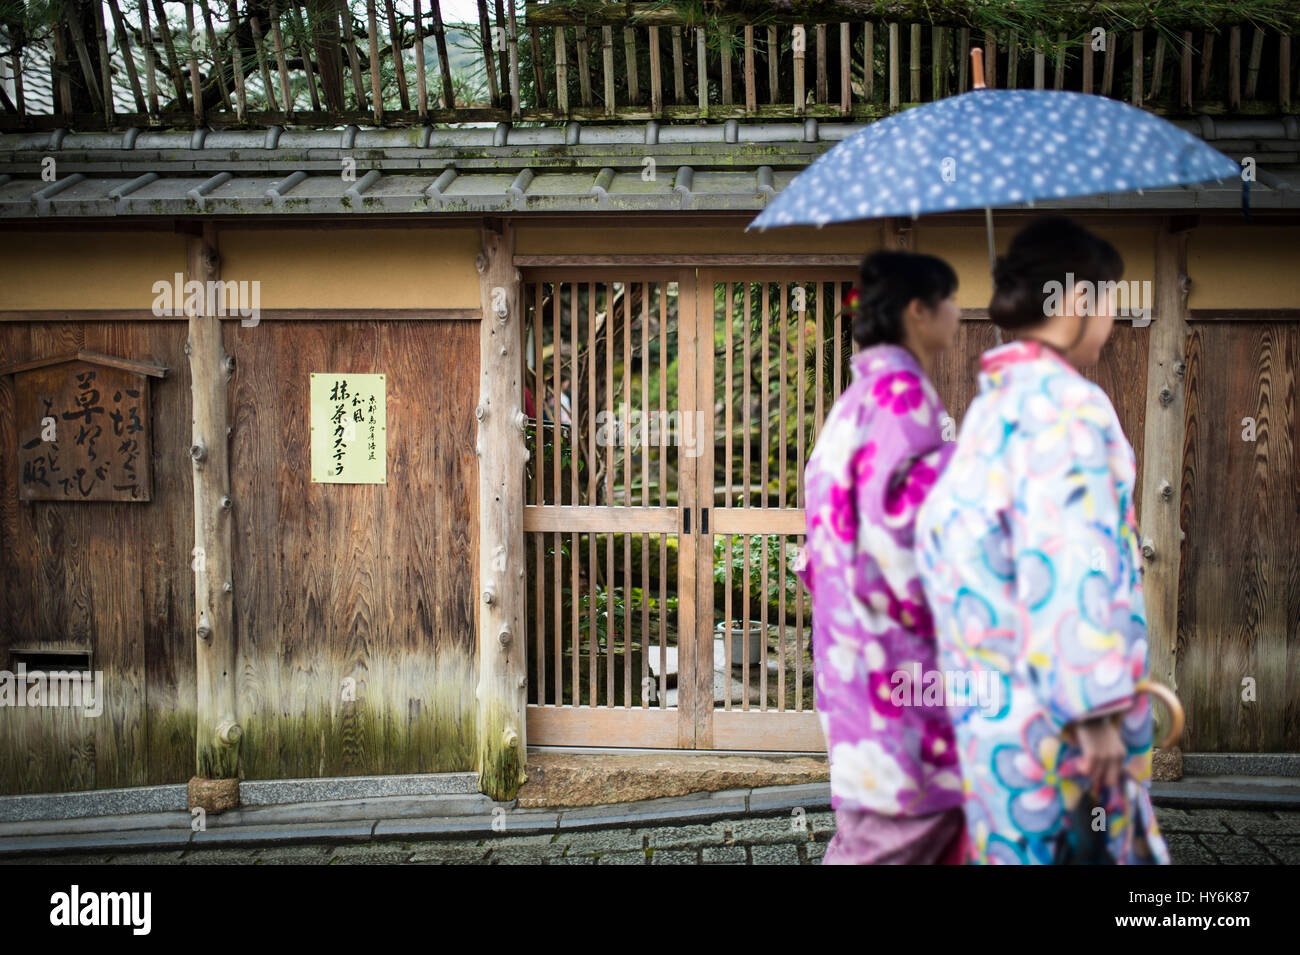 KYOTO, JAPAN - JANUARY 10 2016 : Japanese women in traditional Kimono are walking under the rain with an umbrella on the way to Kiyomizu-Dera temple i Stock Photo